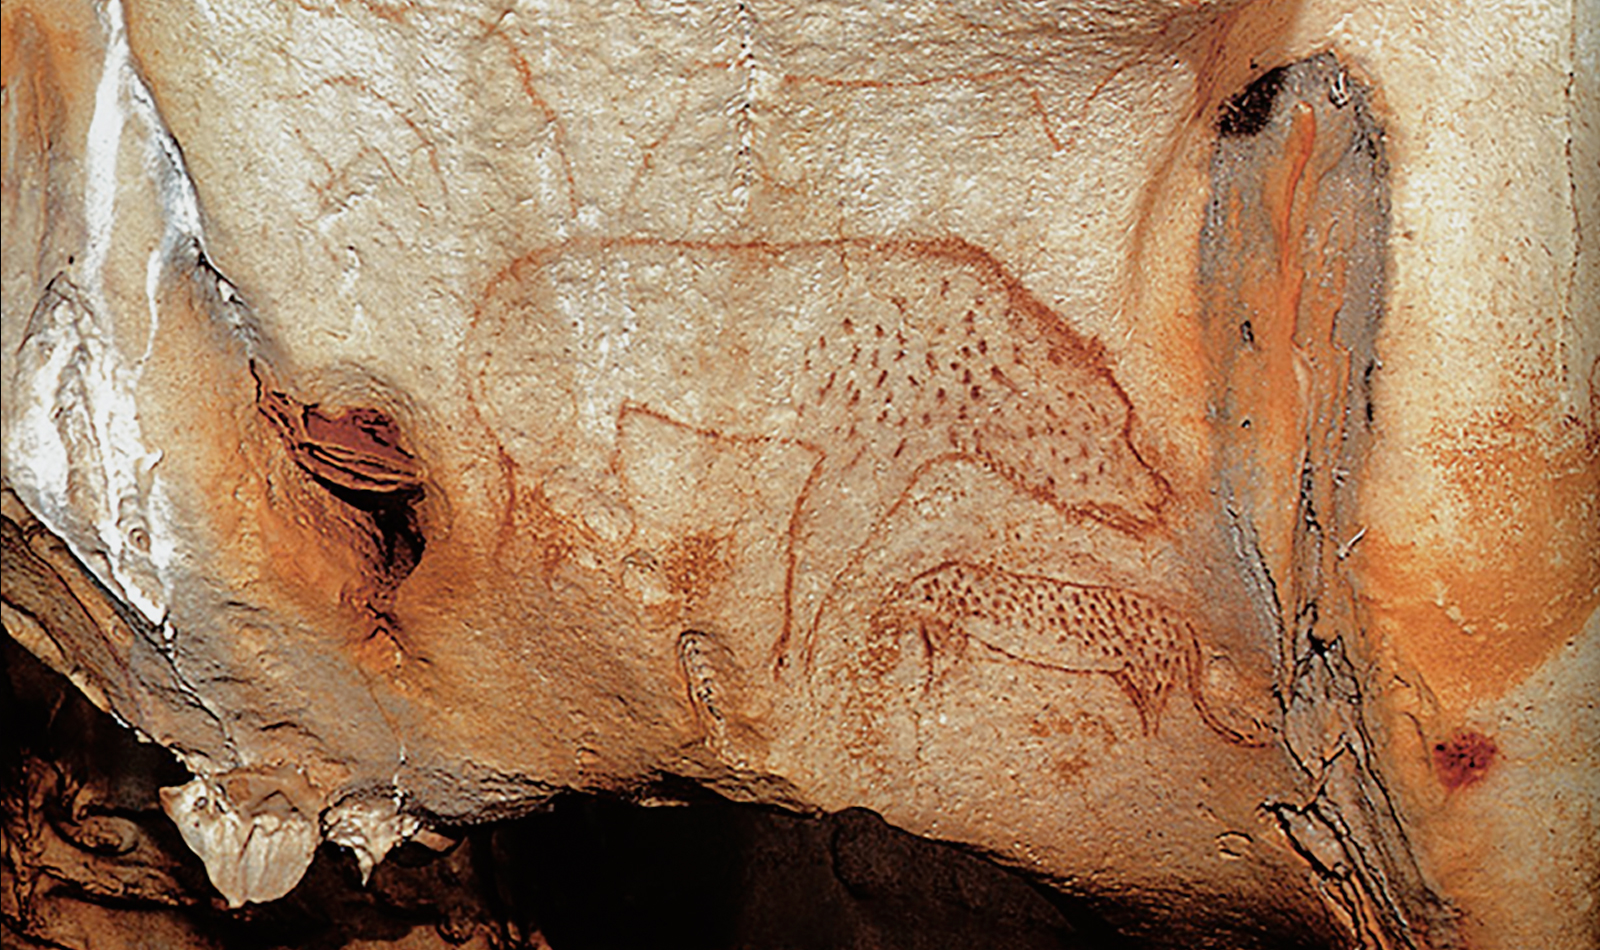 Panther Chauvet Cave Paintings Rock Art France Bradshaw Foundation